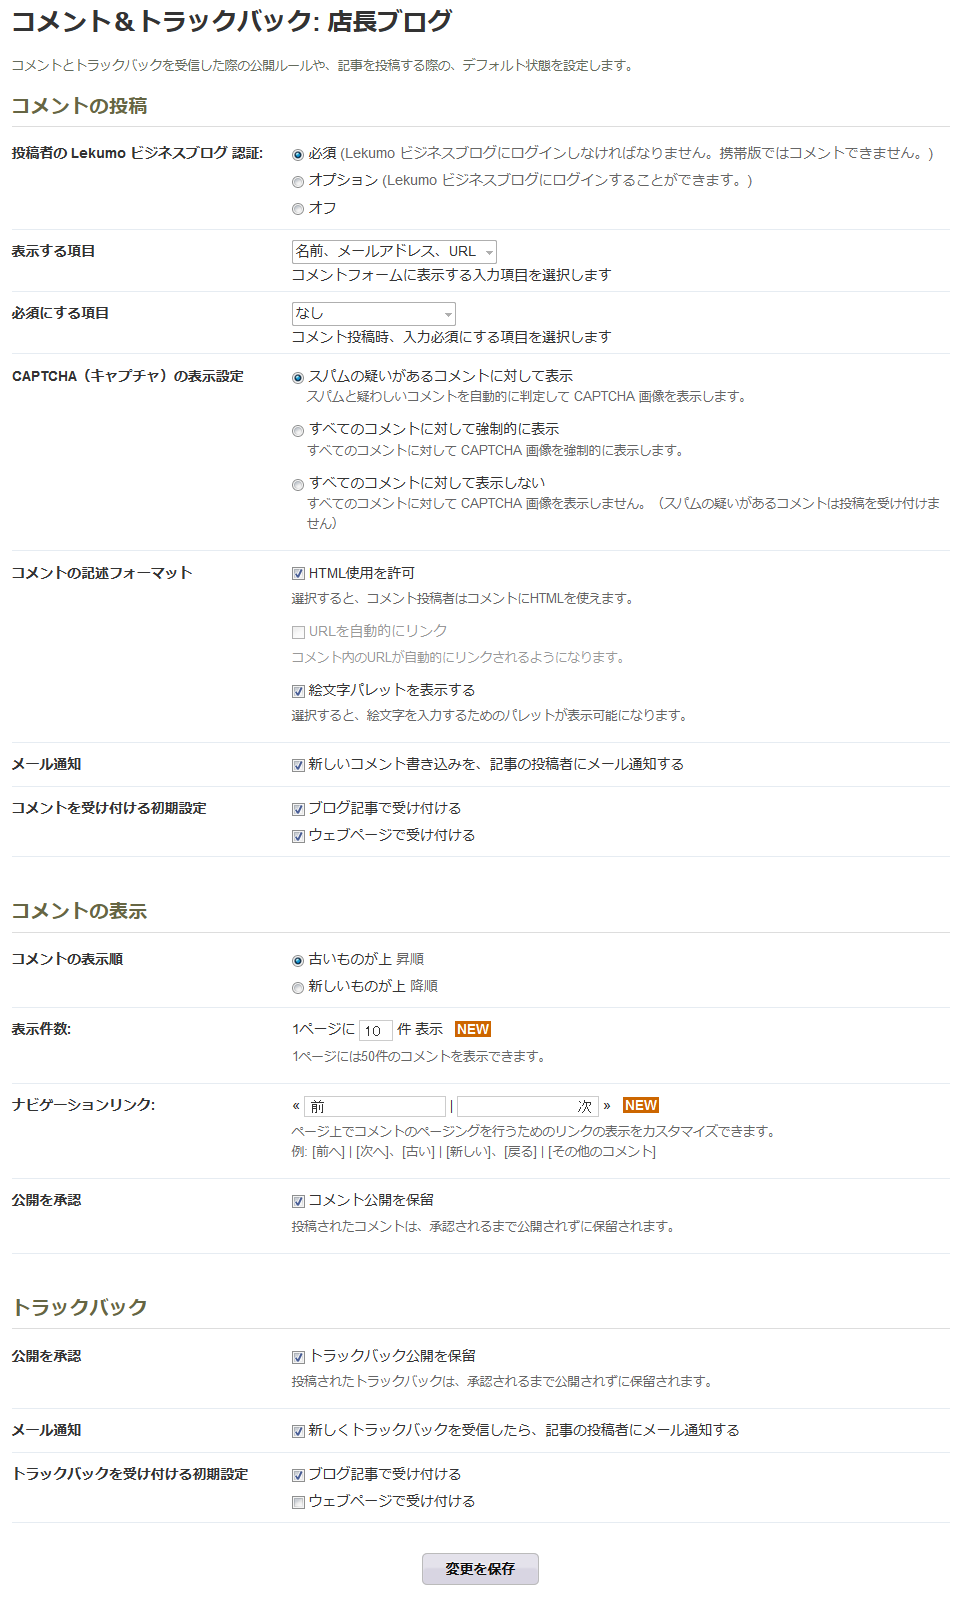 https://www.sixapart.jp/lekumo/bb/support/images/feedback_blog01.png